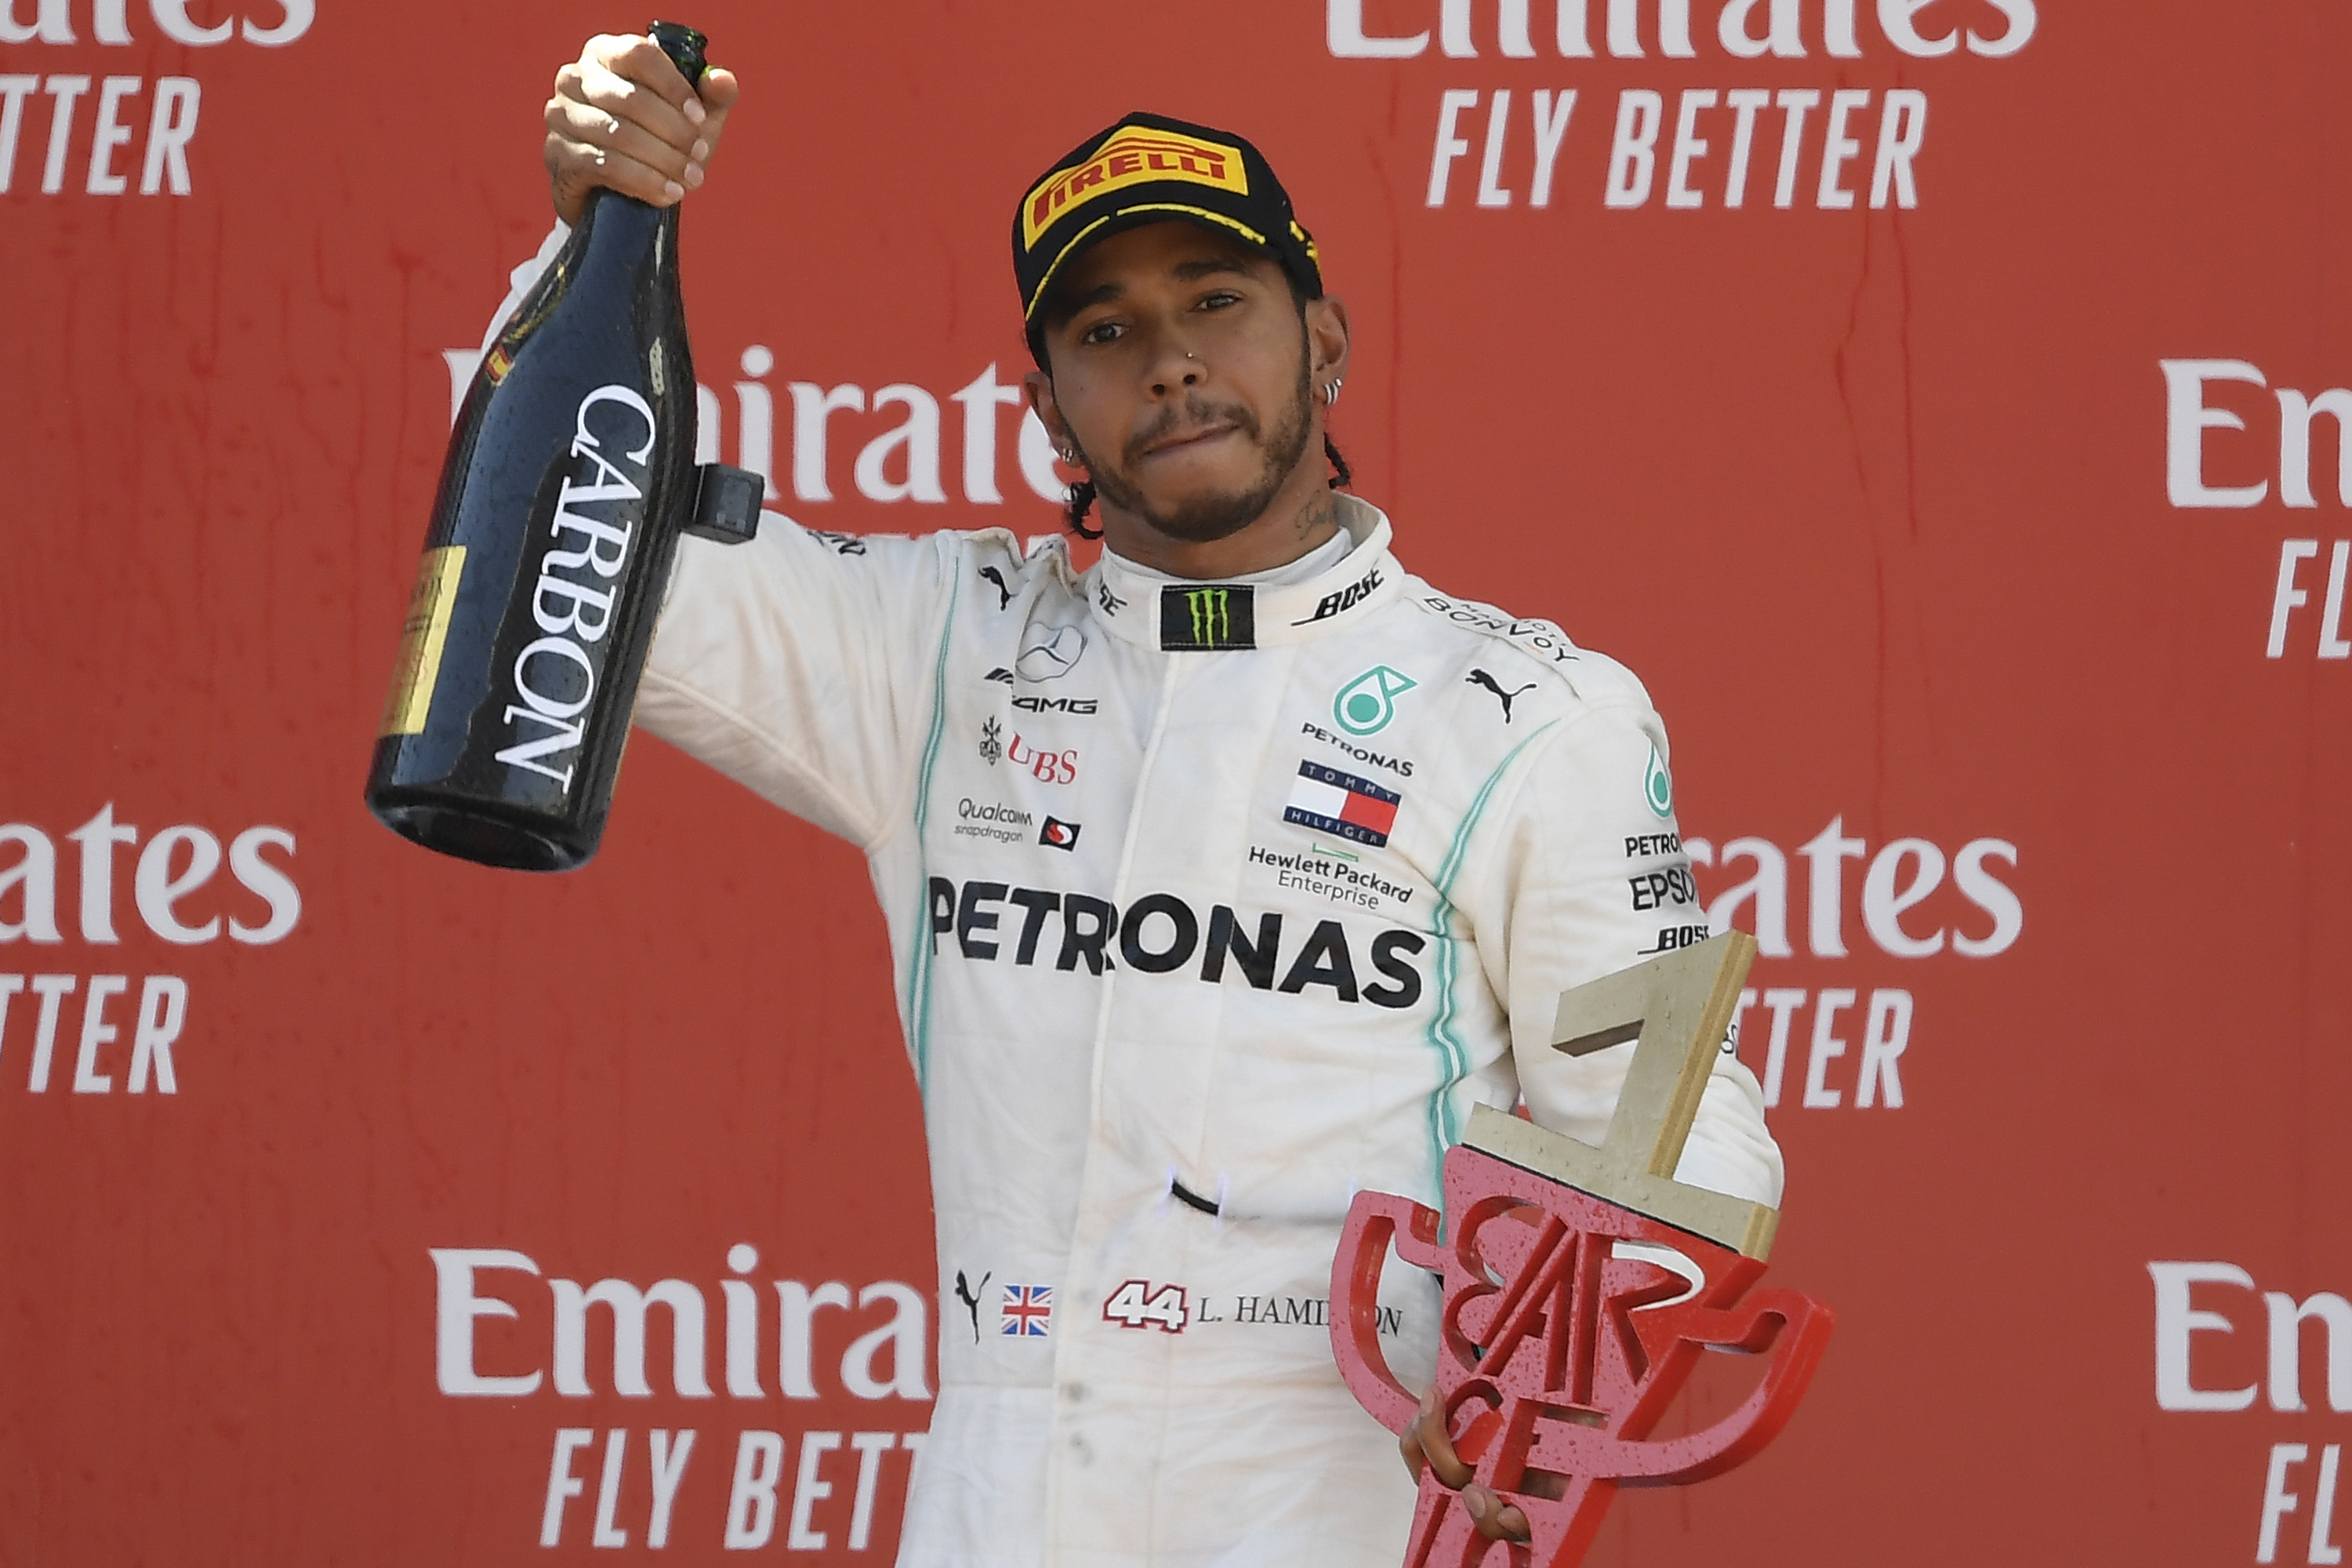 Hamilton vence GP da Inglaterra